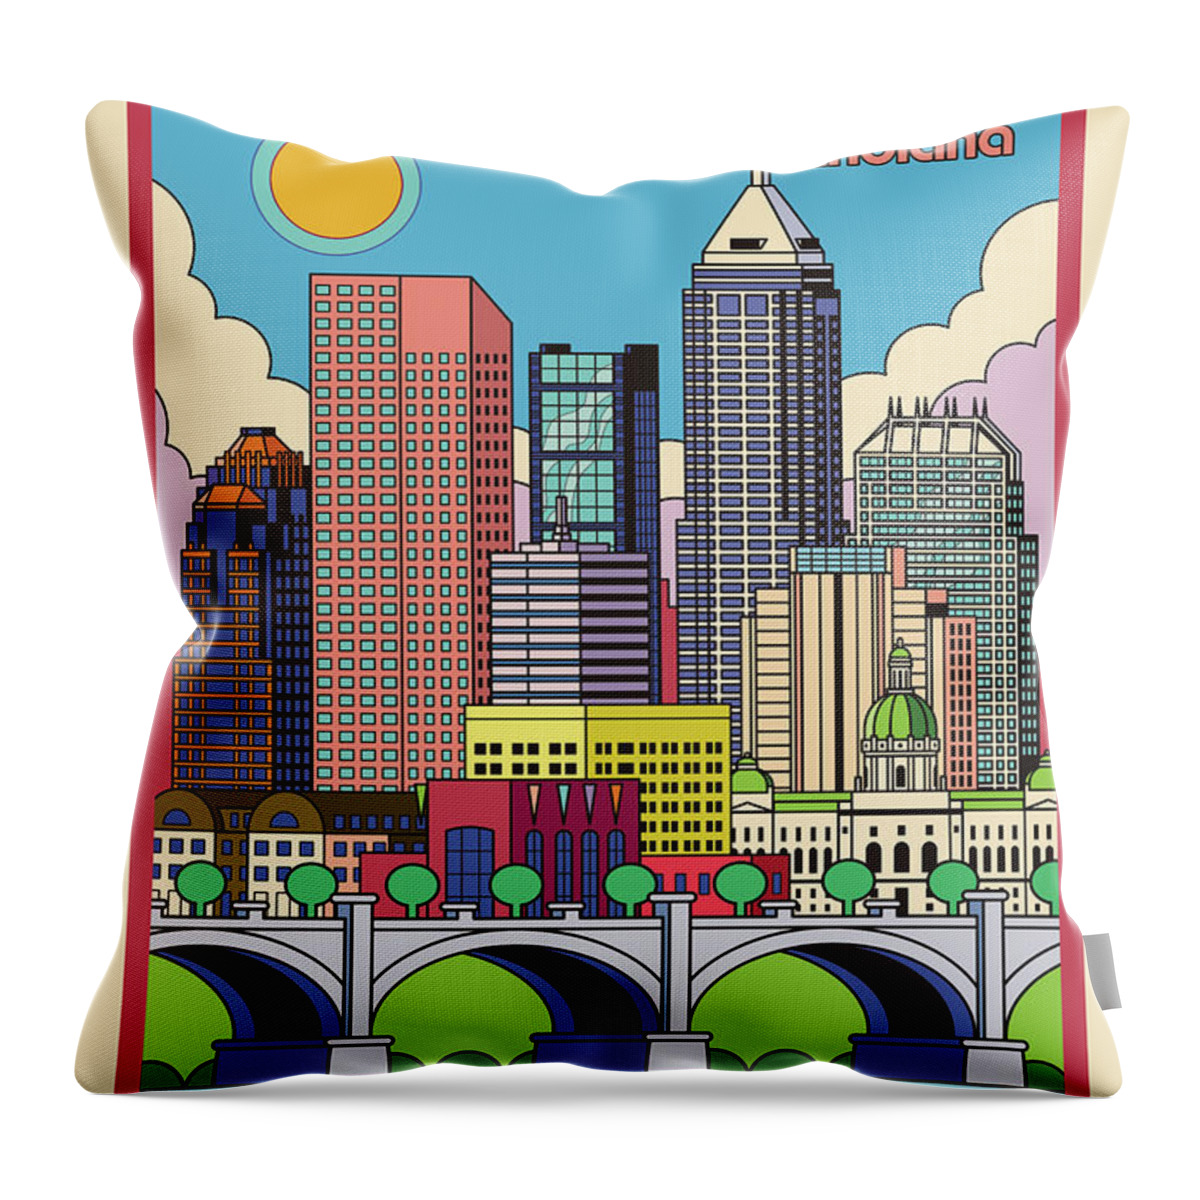 #faatoppicks Throw Pillow featuring the digital art Indianapolis Pop Art Travel Poster by Jim Zahniser